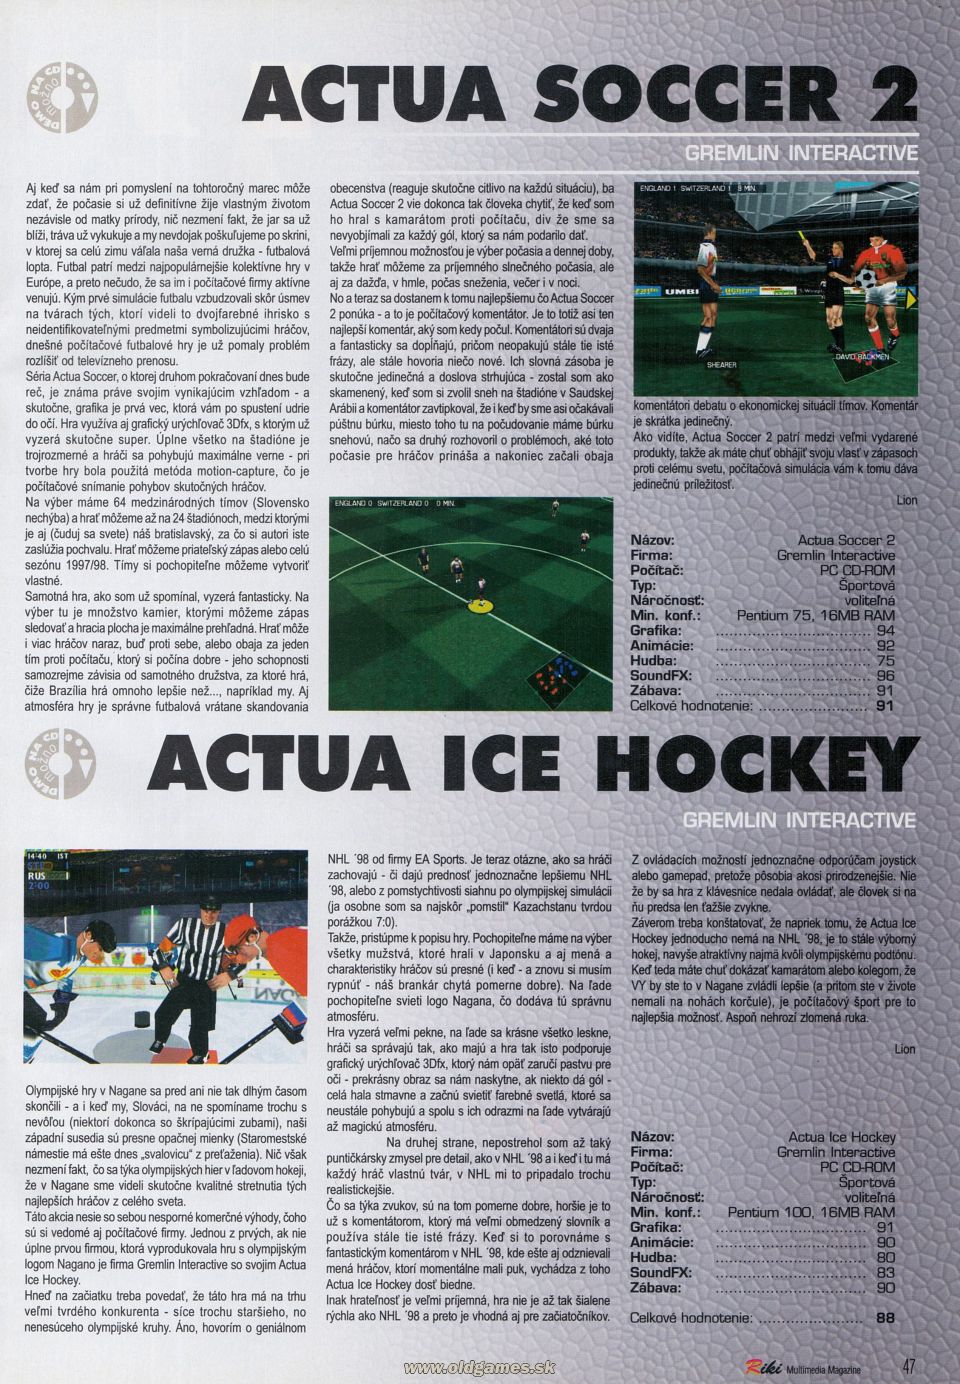 Actua Soccer 2, Actua Ice Hockey